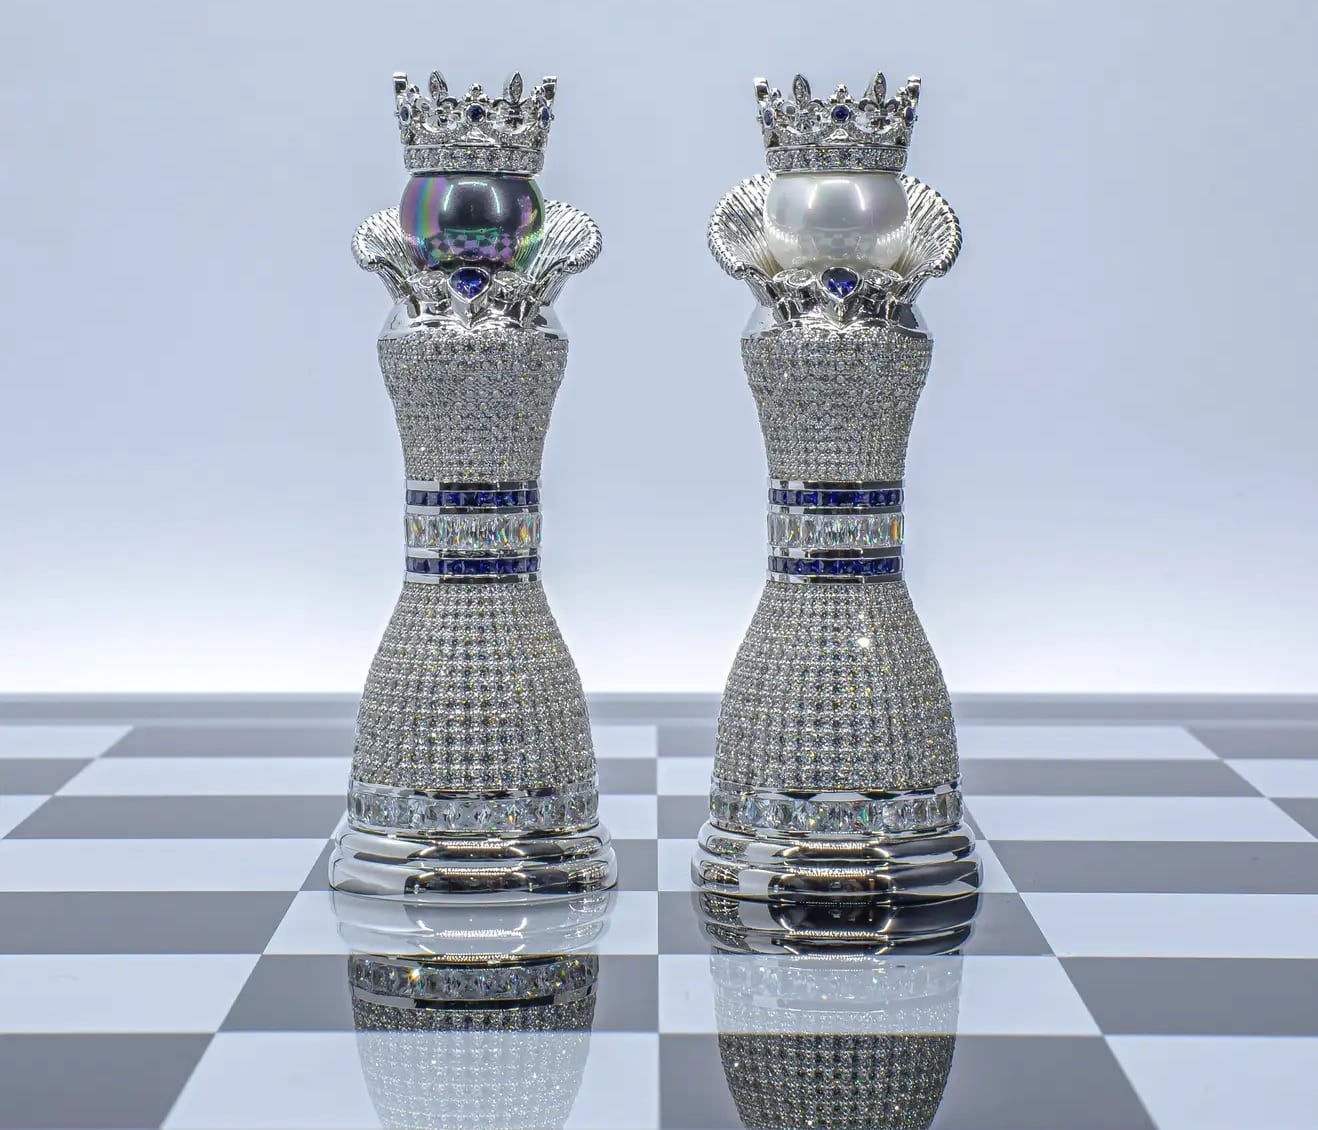 Colin Burn Art chess set